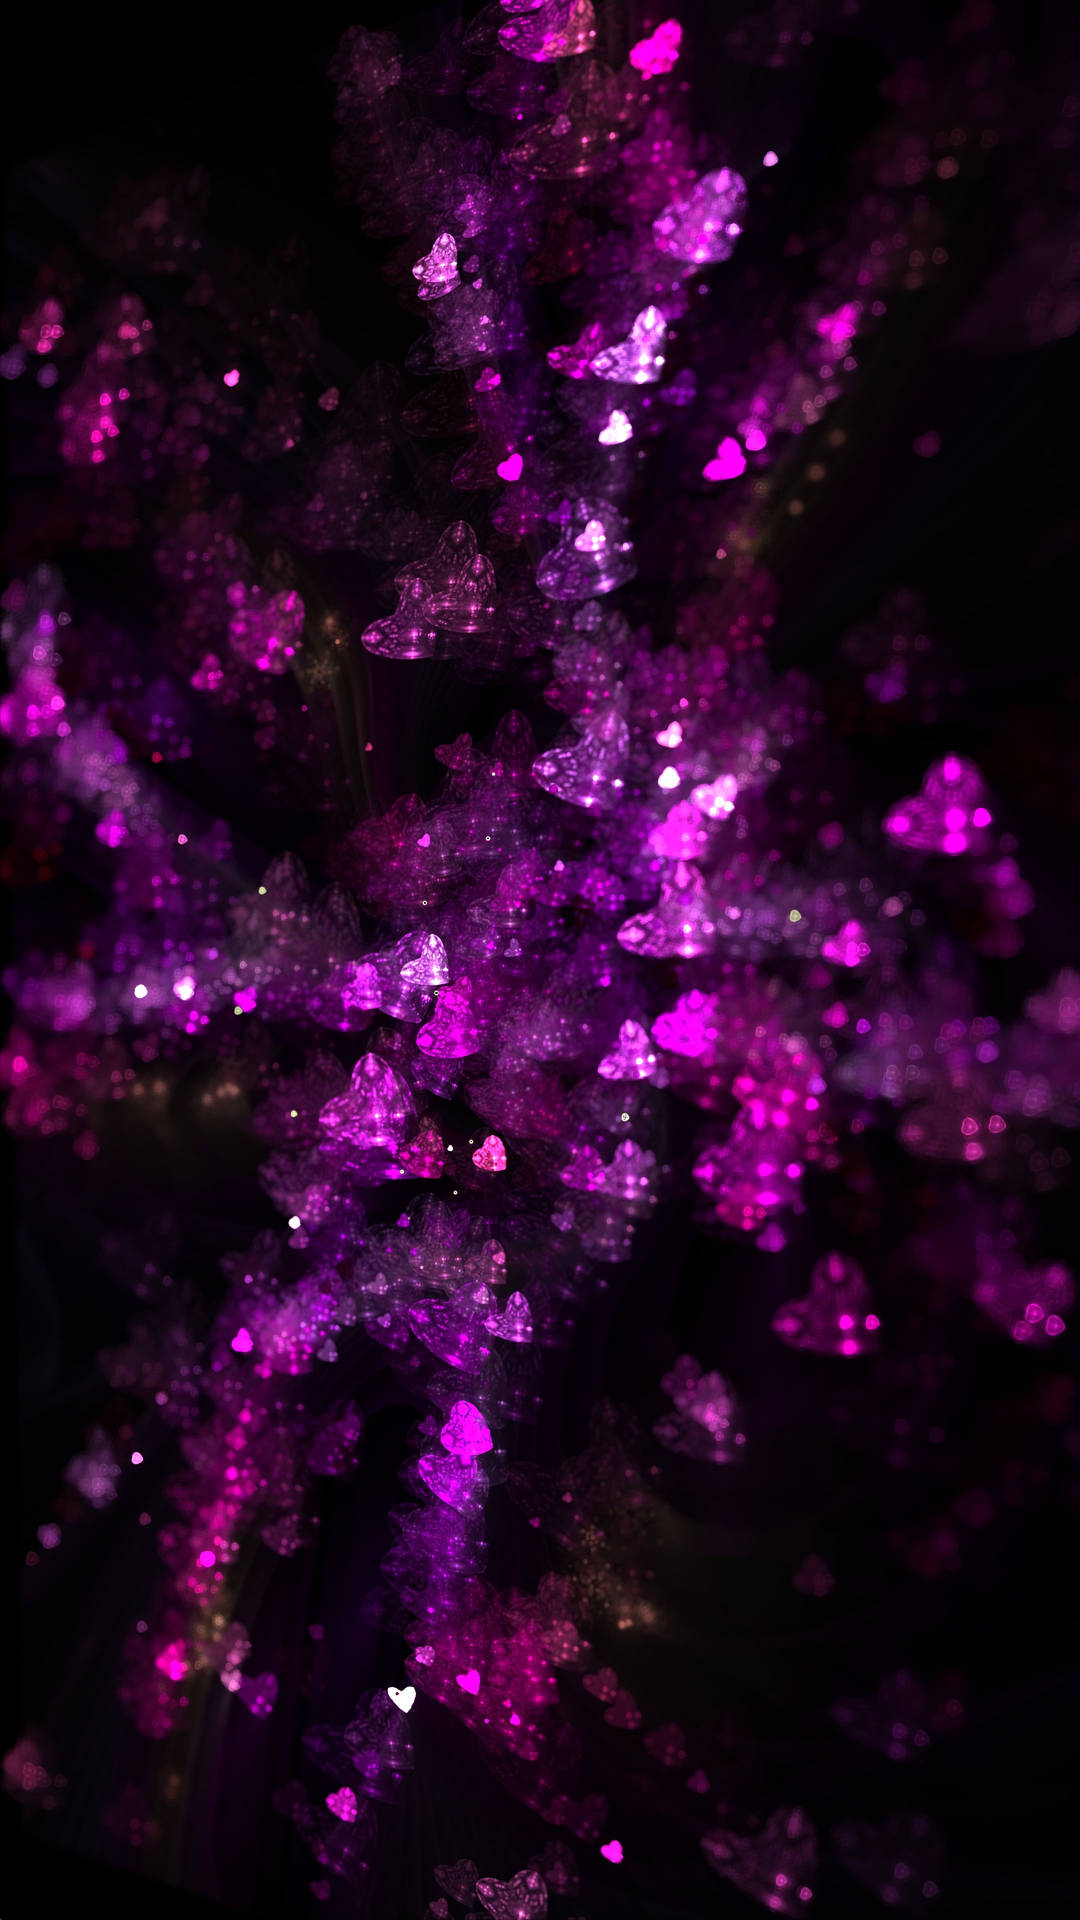 Dark Purple Hearts And Glitters Background